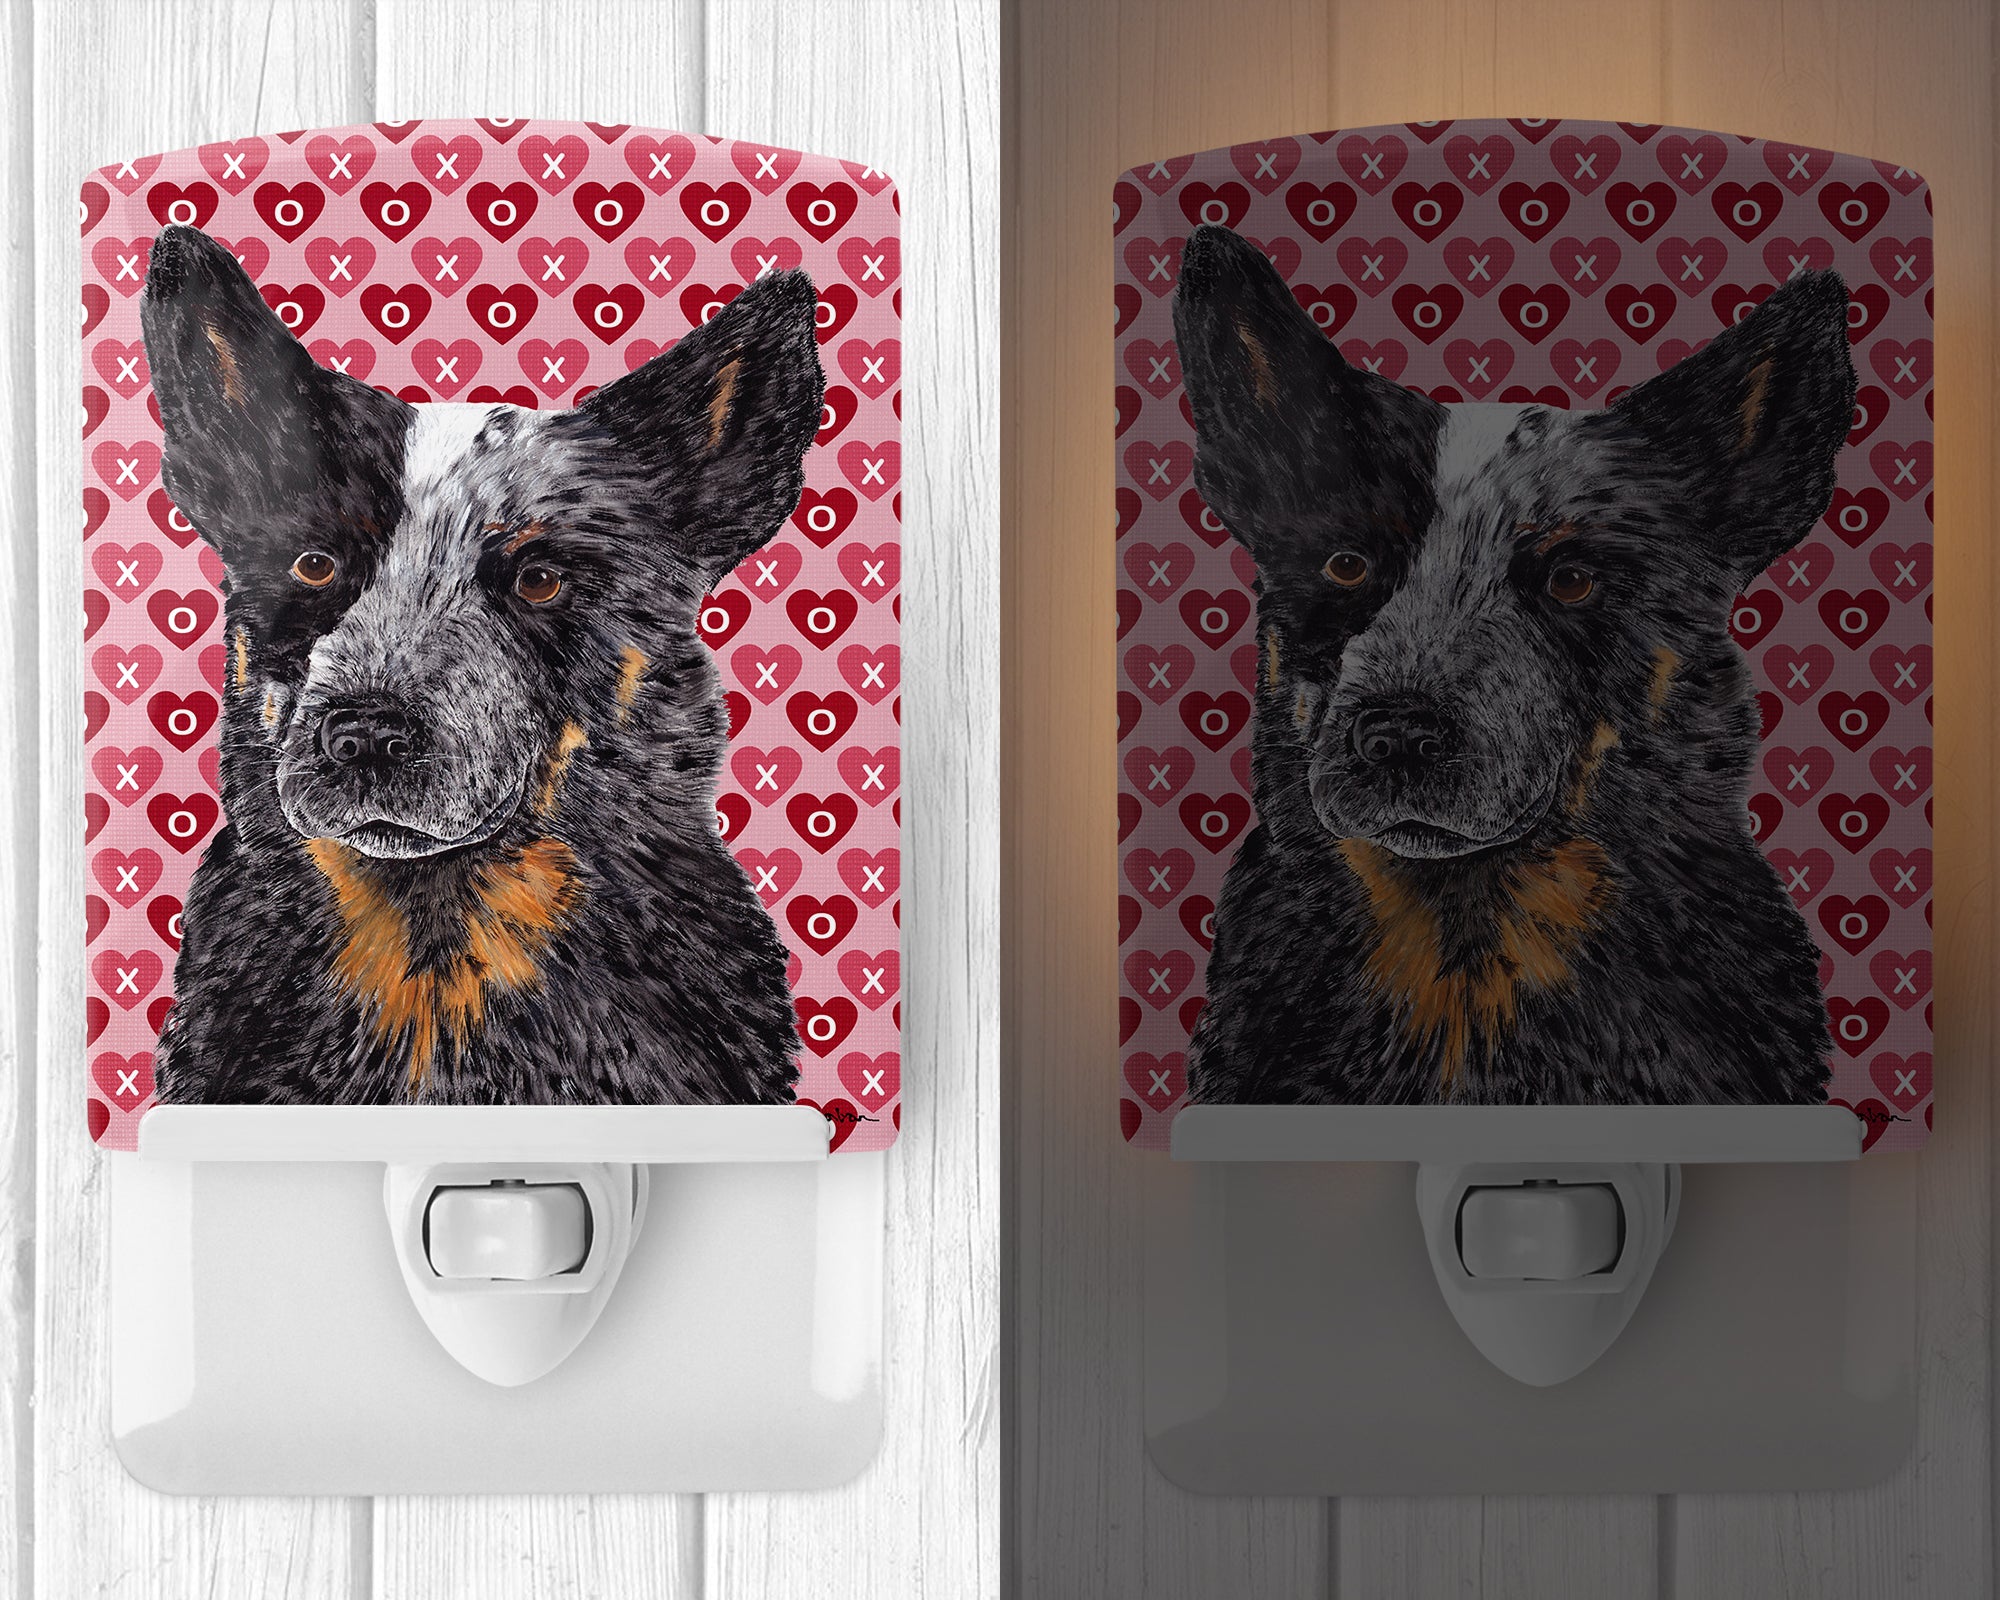 Australian Cattle Dog Hearts Love Valentine's Day Ceramic Night Light SC9243CNL - the-store.com